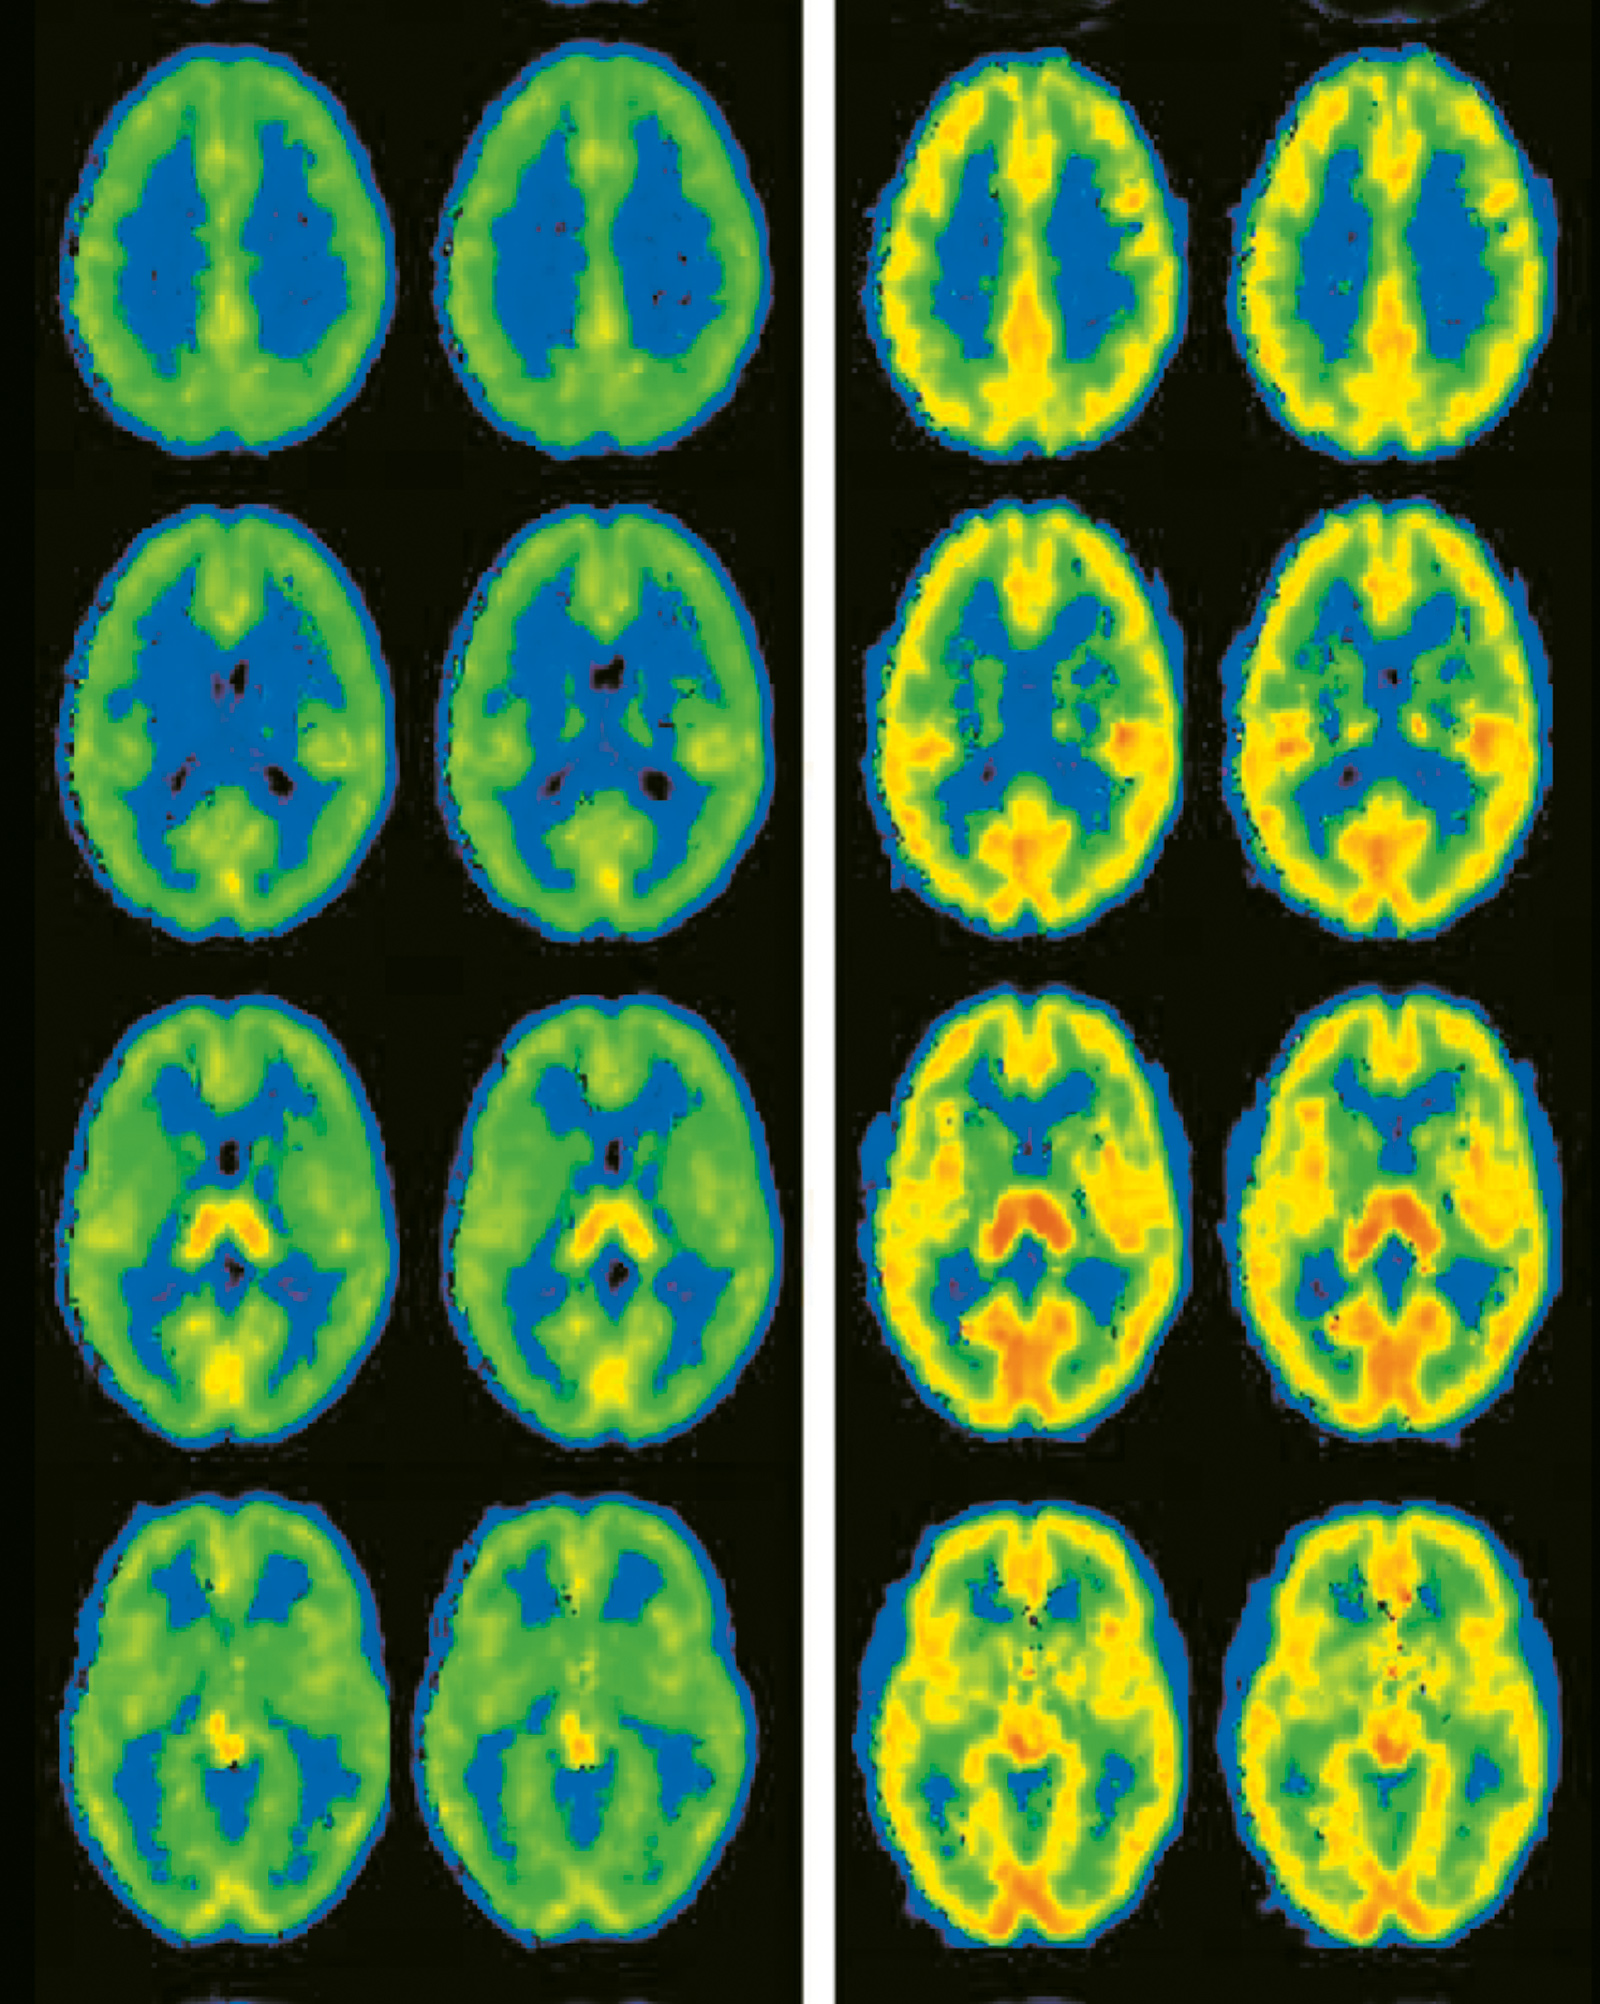 Nelly Alia-Klein et al., “Brain ­Monoamine ­Oxidase A Activity ­Predicts Trait ­Aggression,” Journal of Neuroscience, May 7, 2008